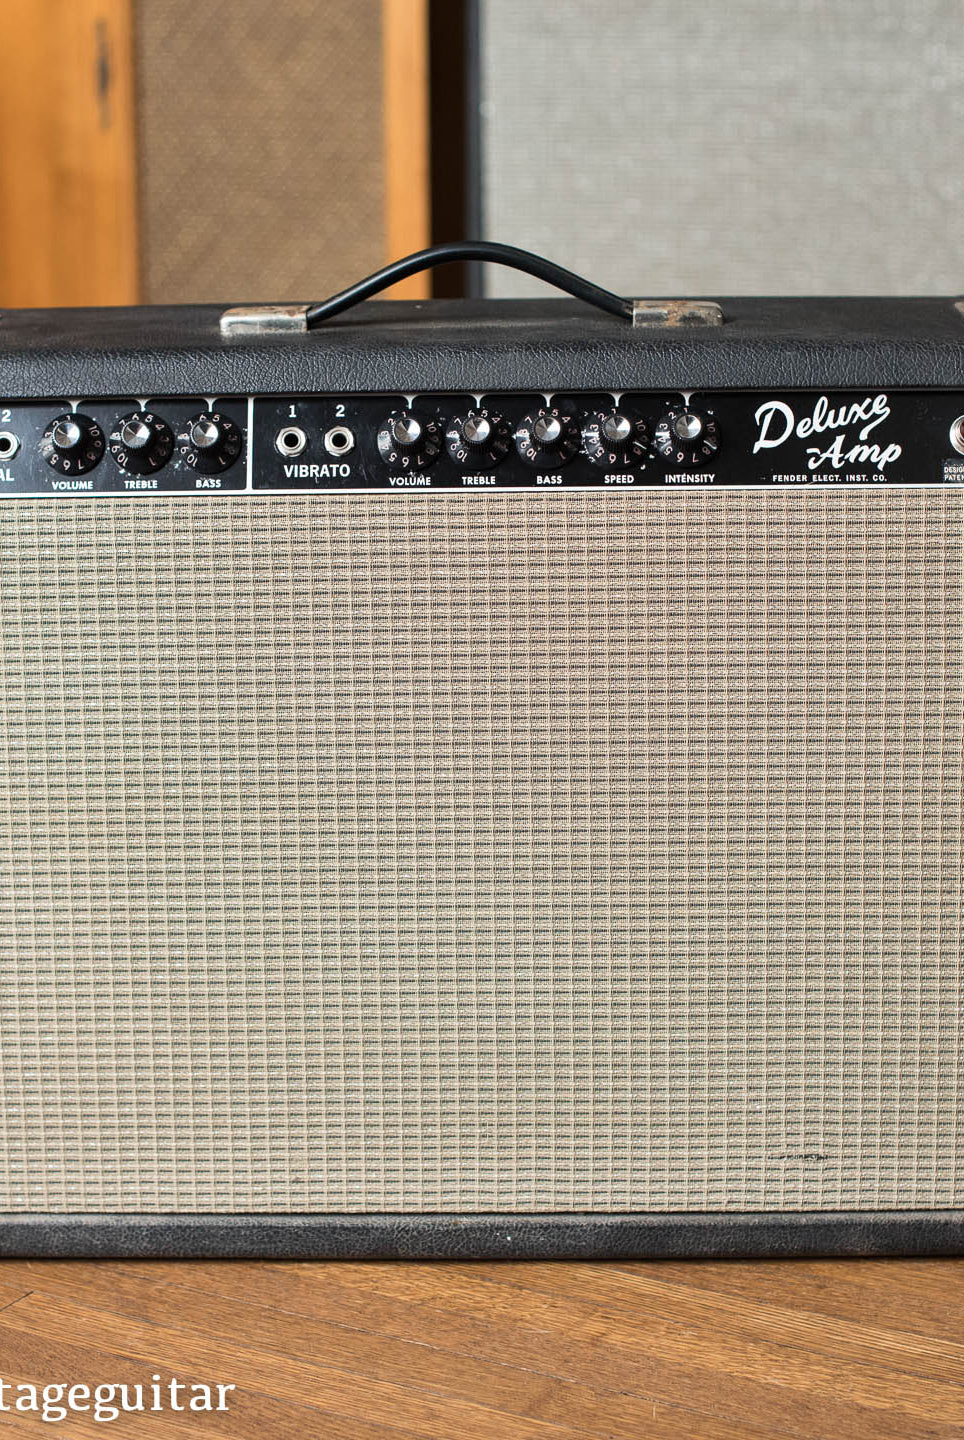 Vintage 1965 Fender Deluxe Amp black guitar amplifier